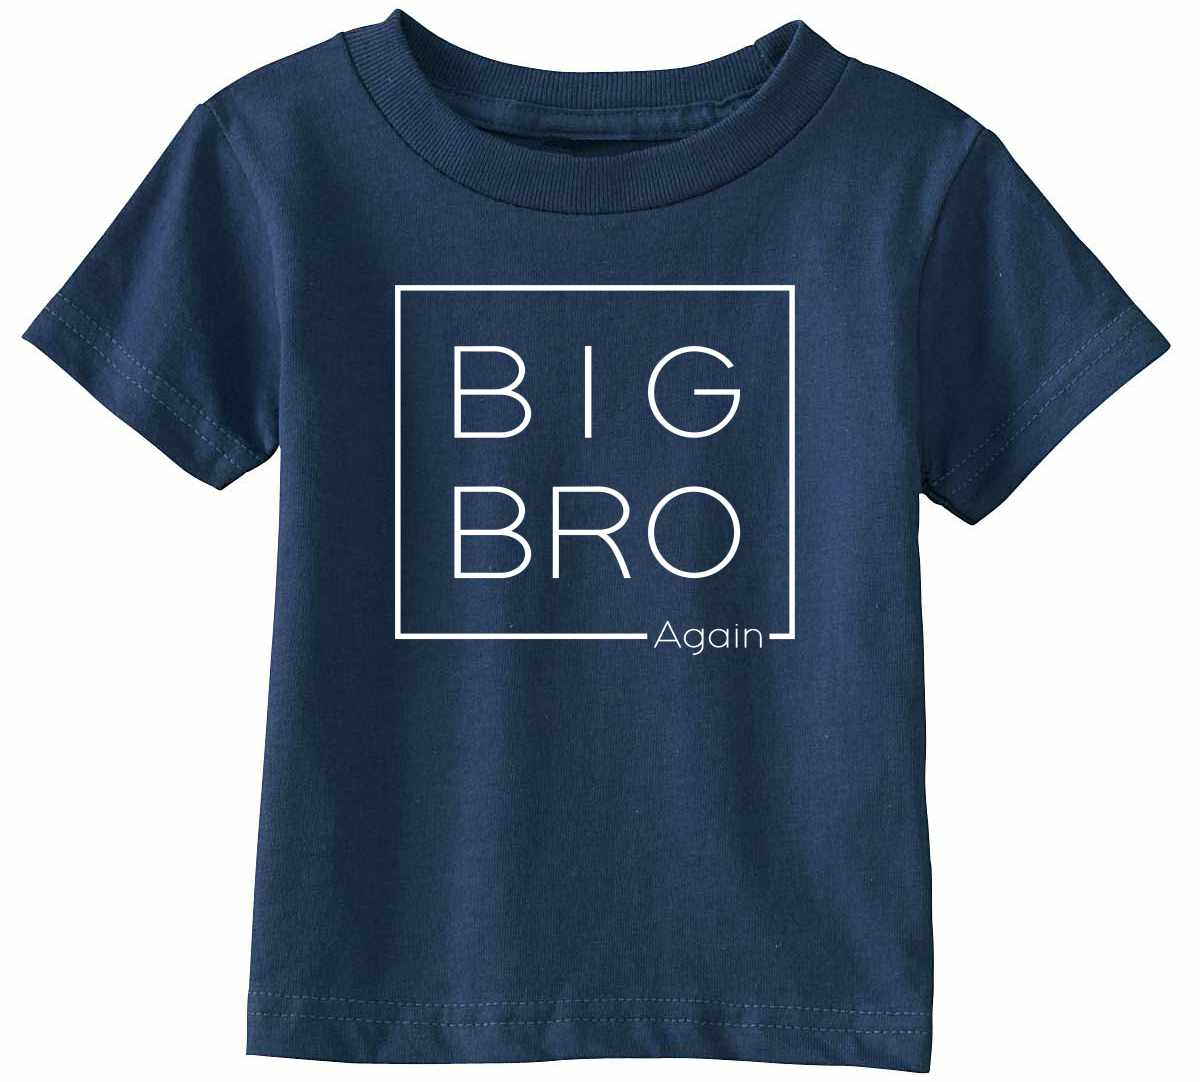 Big Bro Again- Big Brother Box on Infant-Toddler T-Shirt (#1311-7)